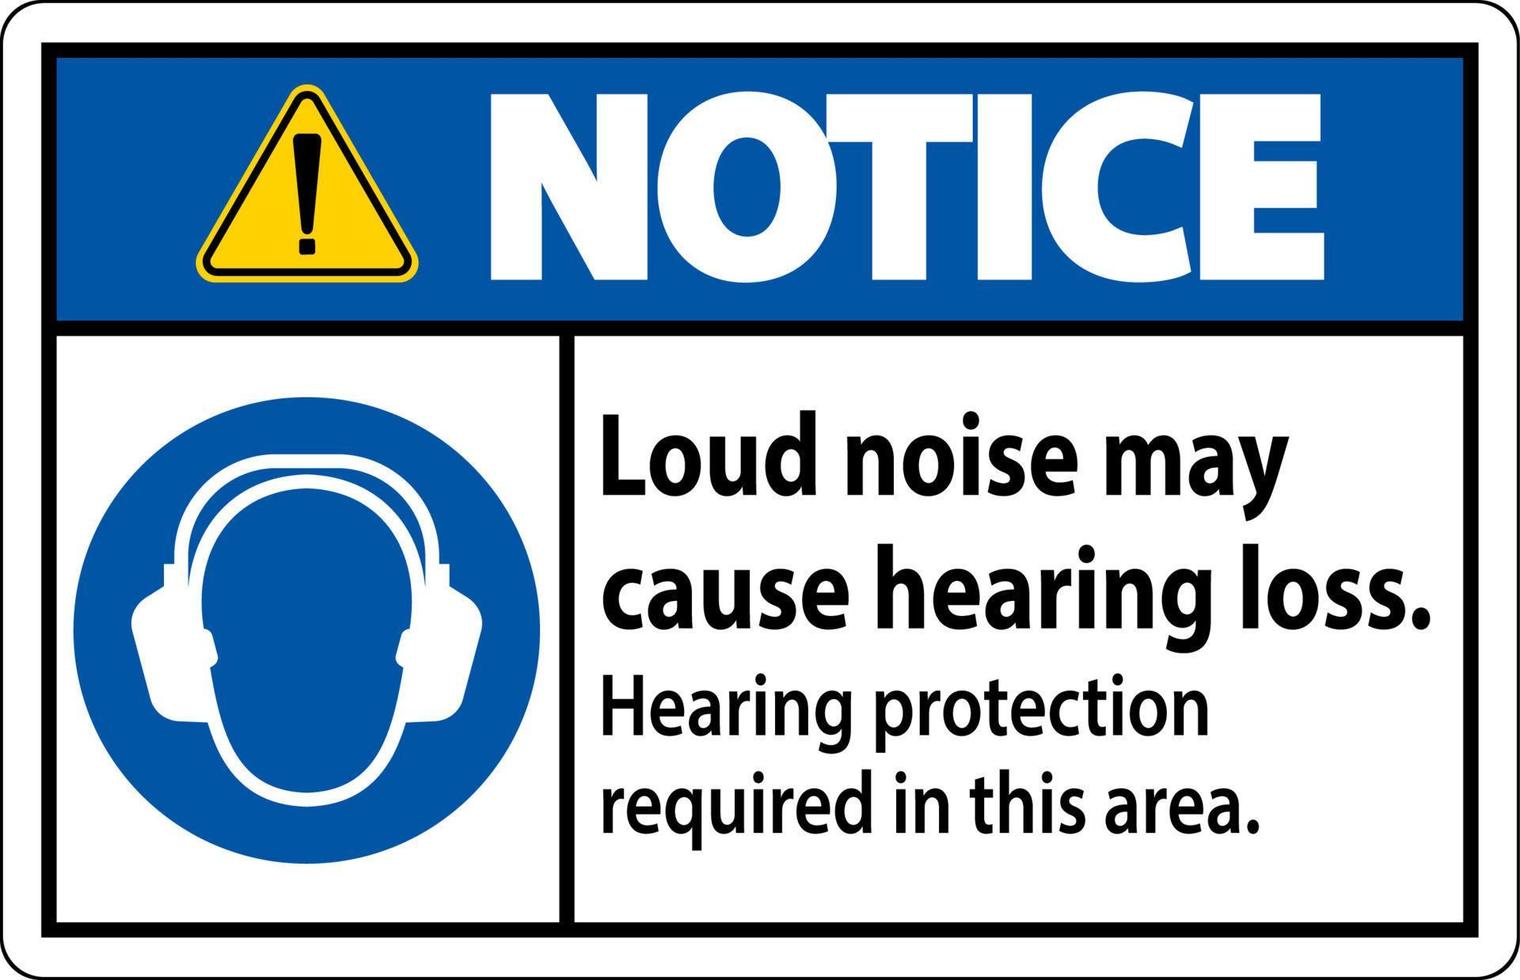 Aviso de protección auditiva requerida firmar sobre fondo blanco. vector